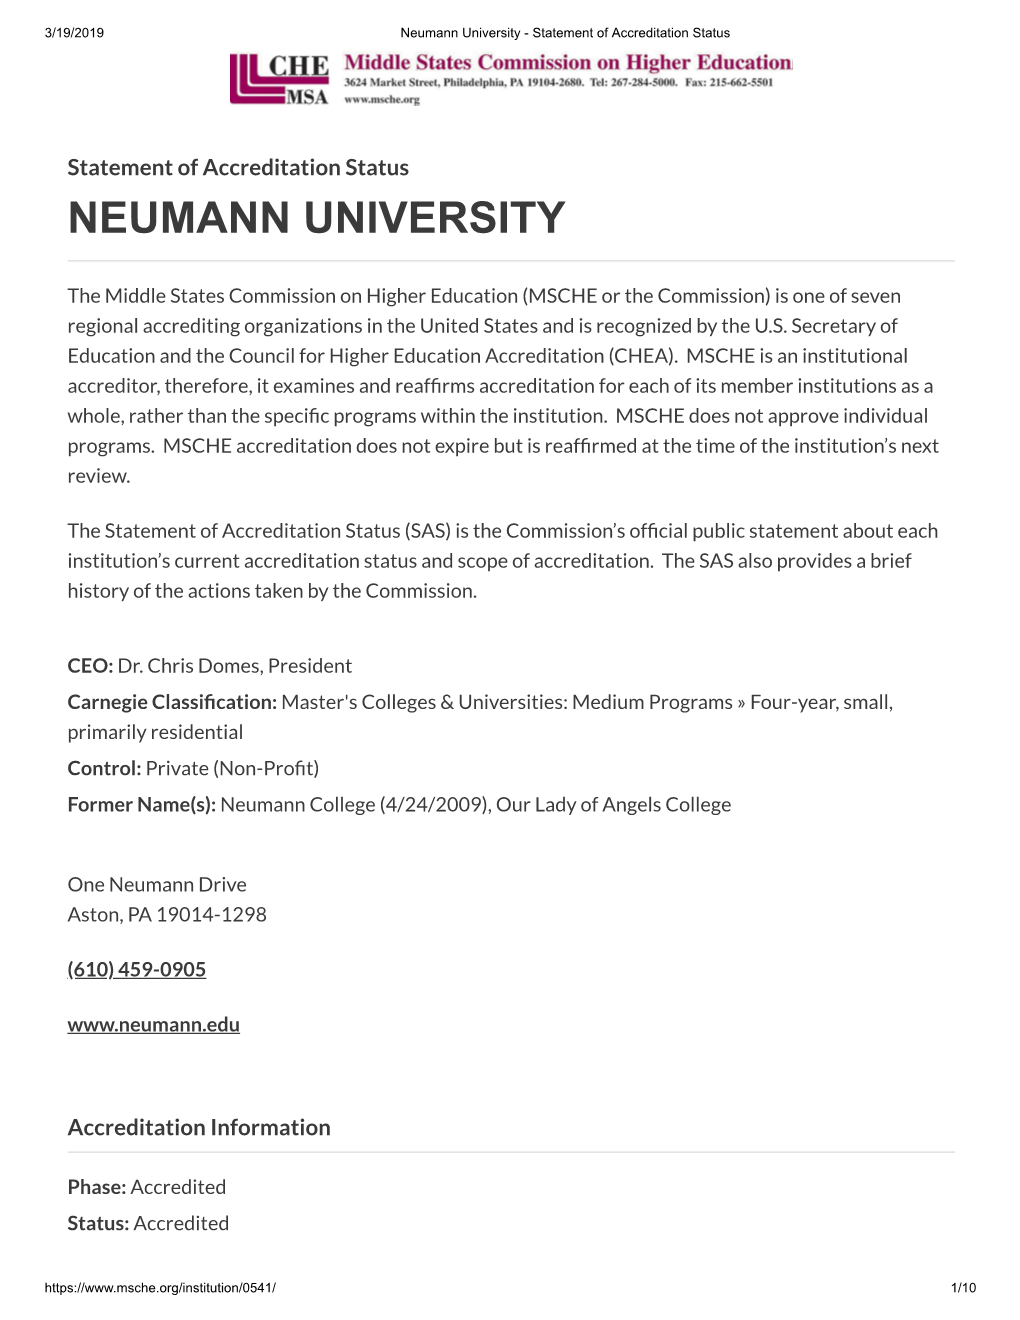 Neumann University - Statement of Accreditation Status